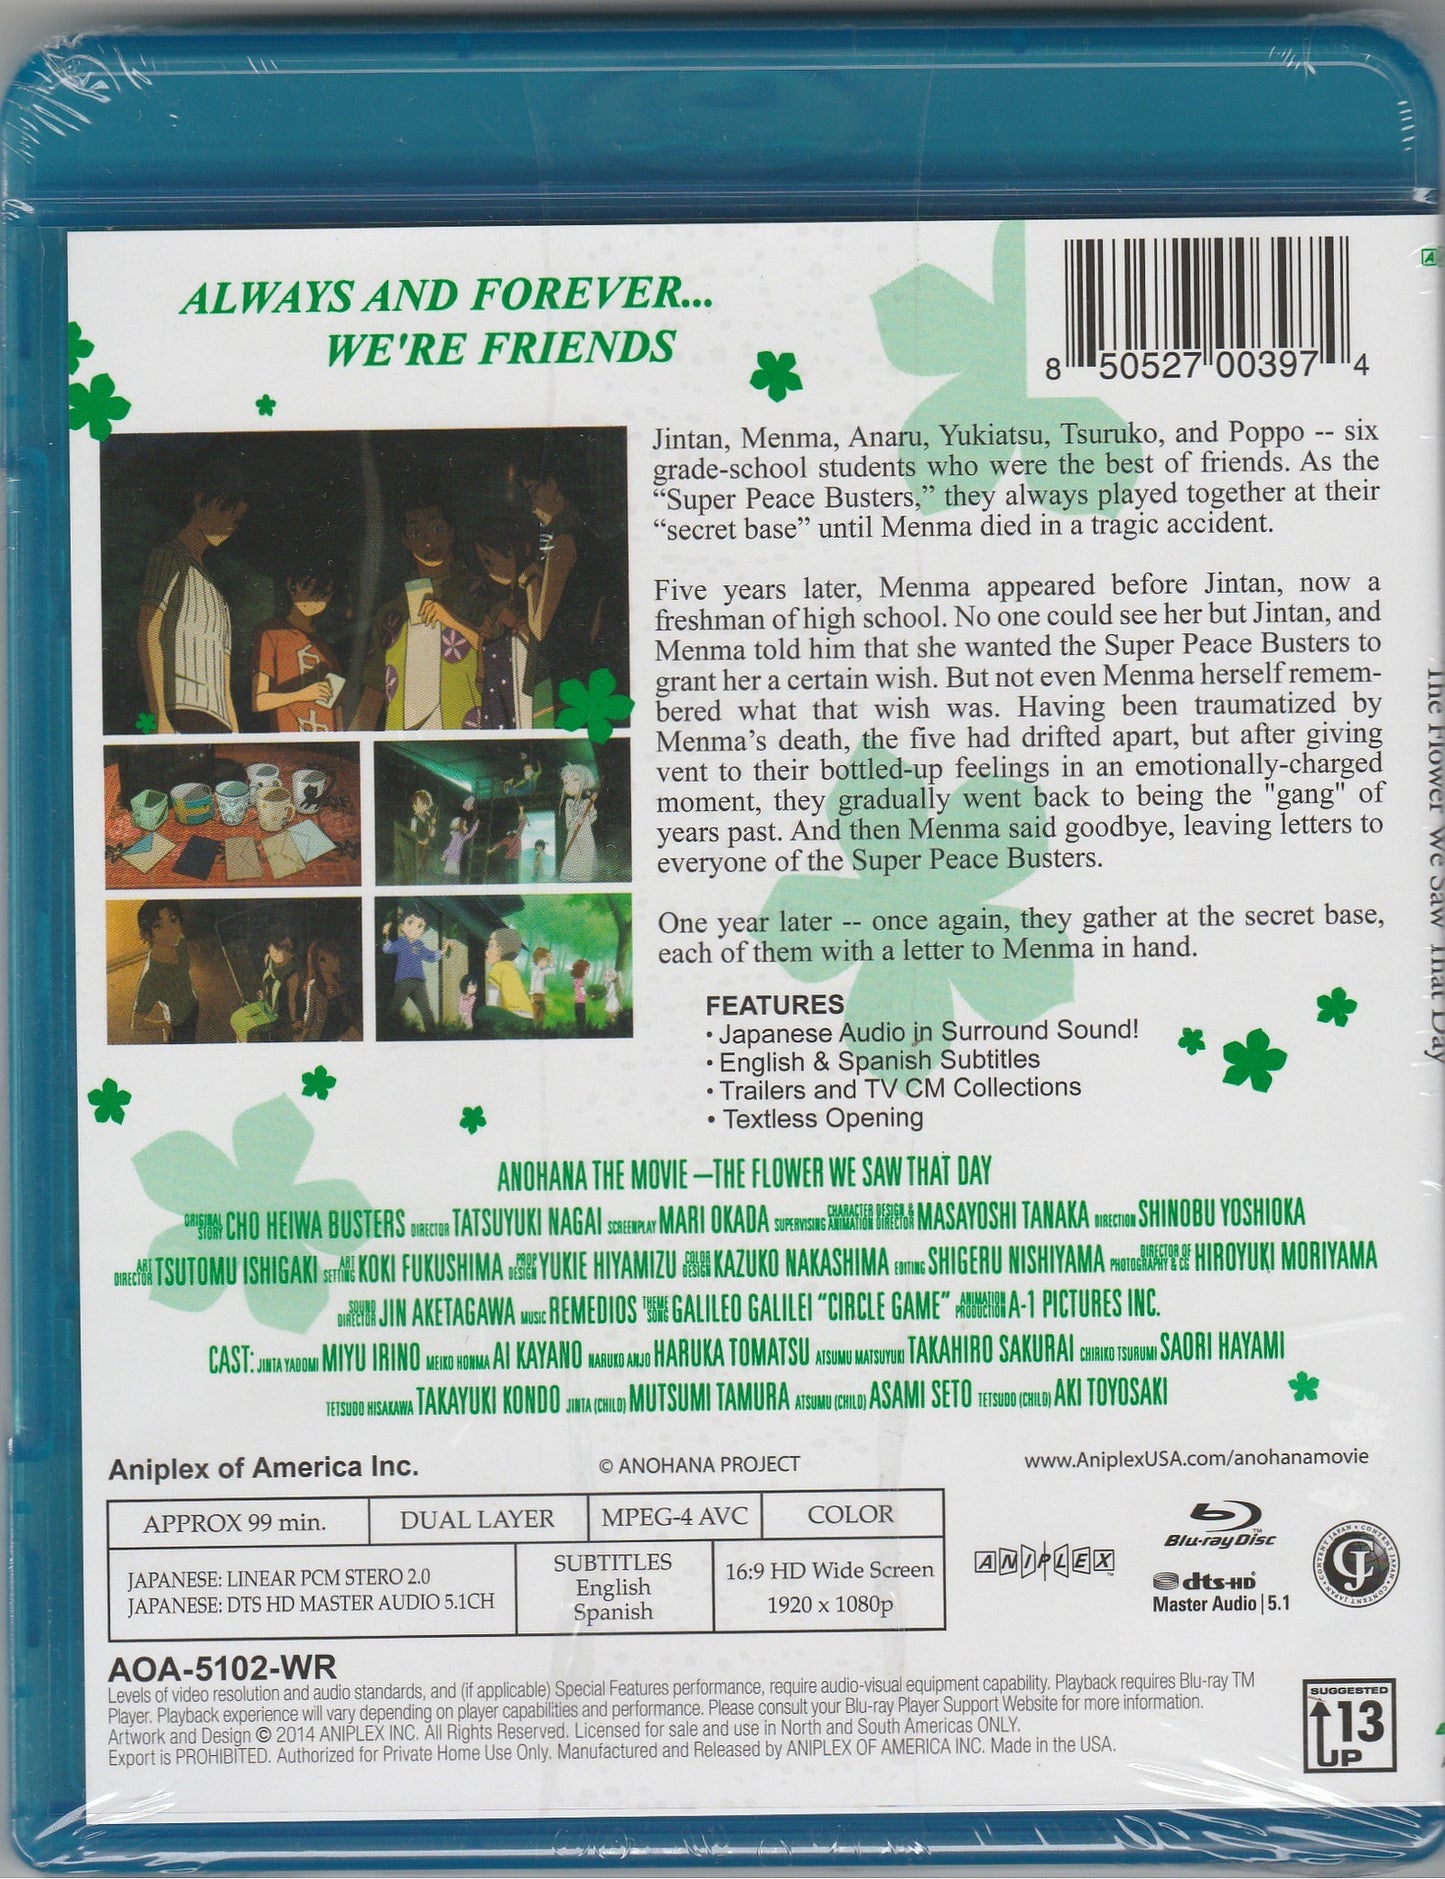 Anohana The Movie Blu-ray Disc